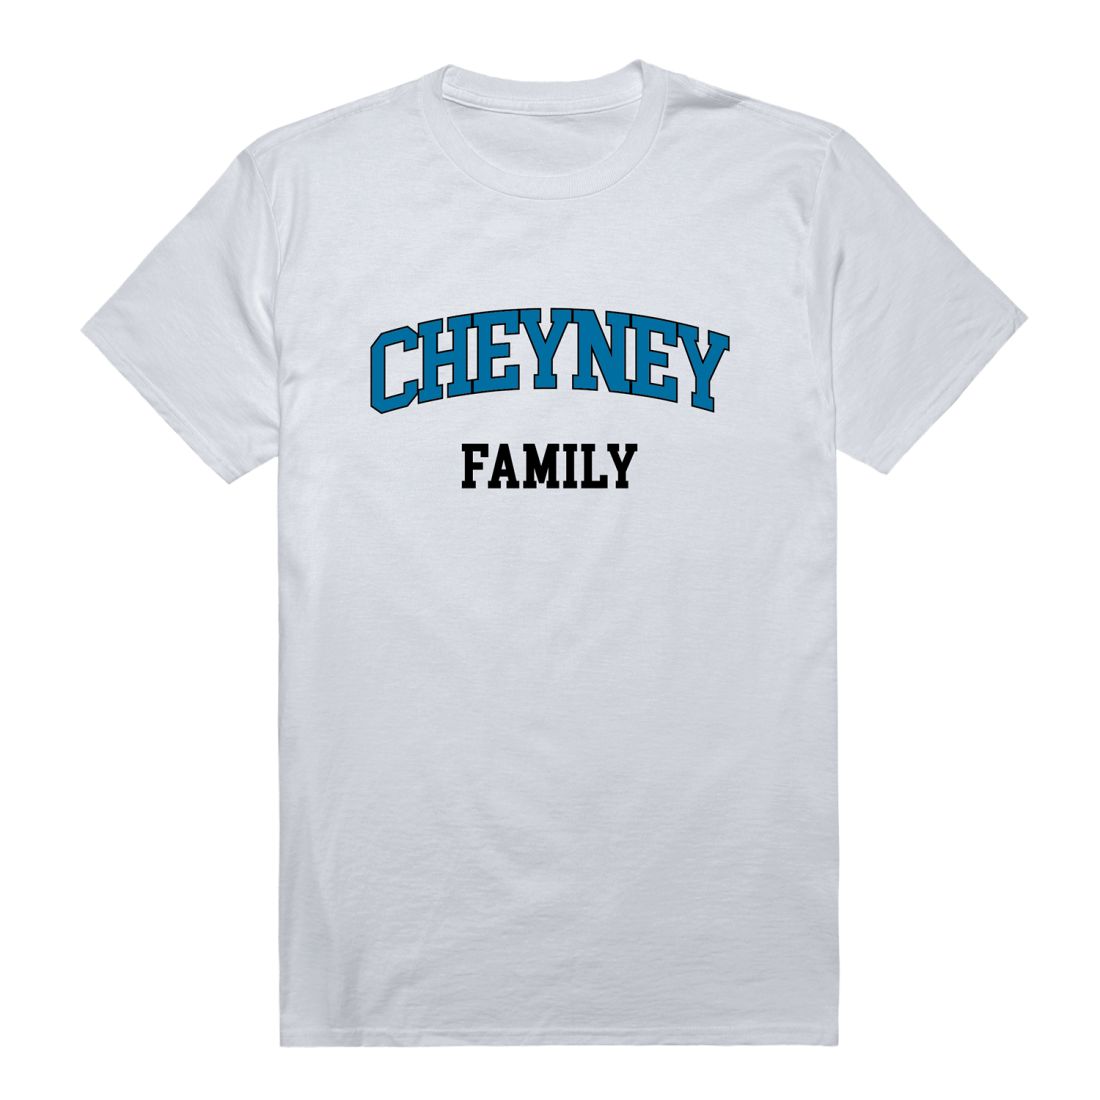 Cheyney University of Pennsylvania Wolves Family T-Shirt